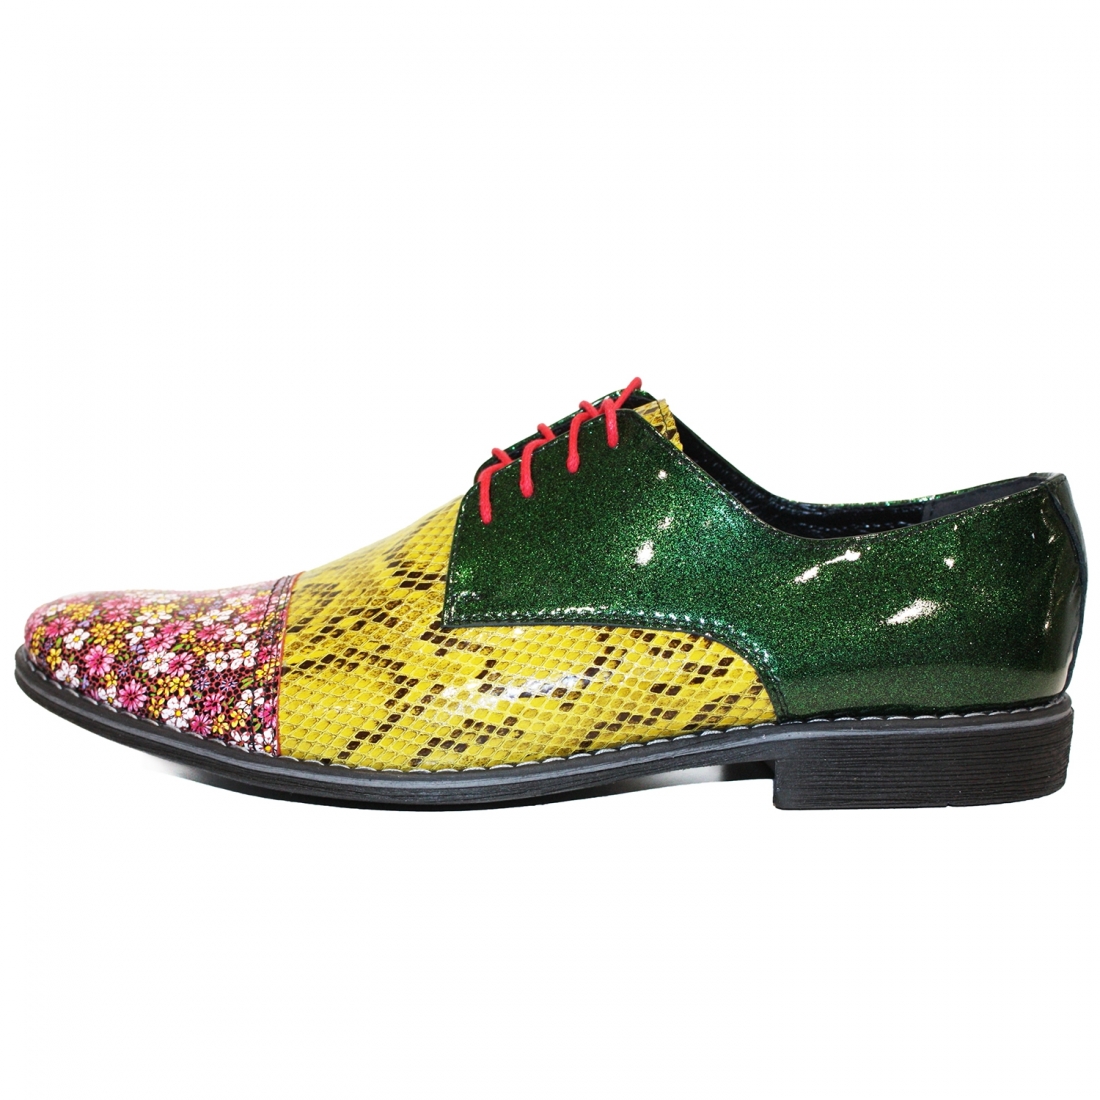 Modello Mixare - クラシックシューズ - Handmade Colorful Italian Leather Shoes